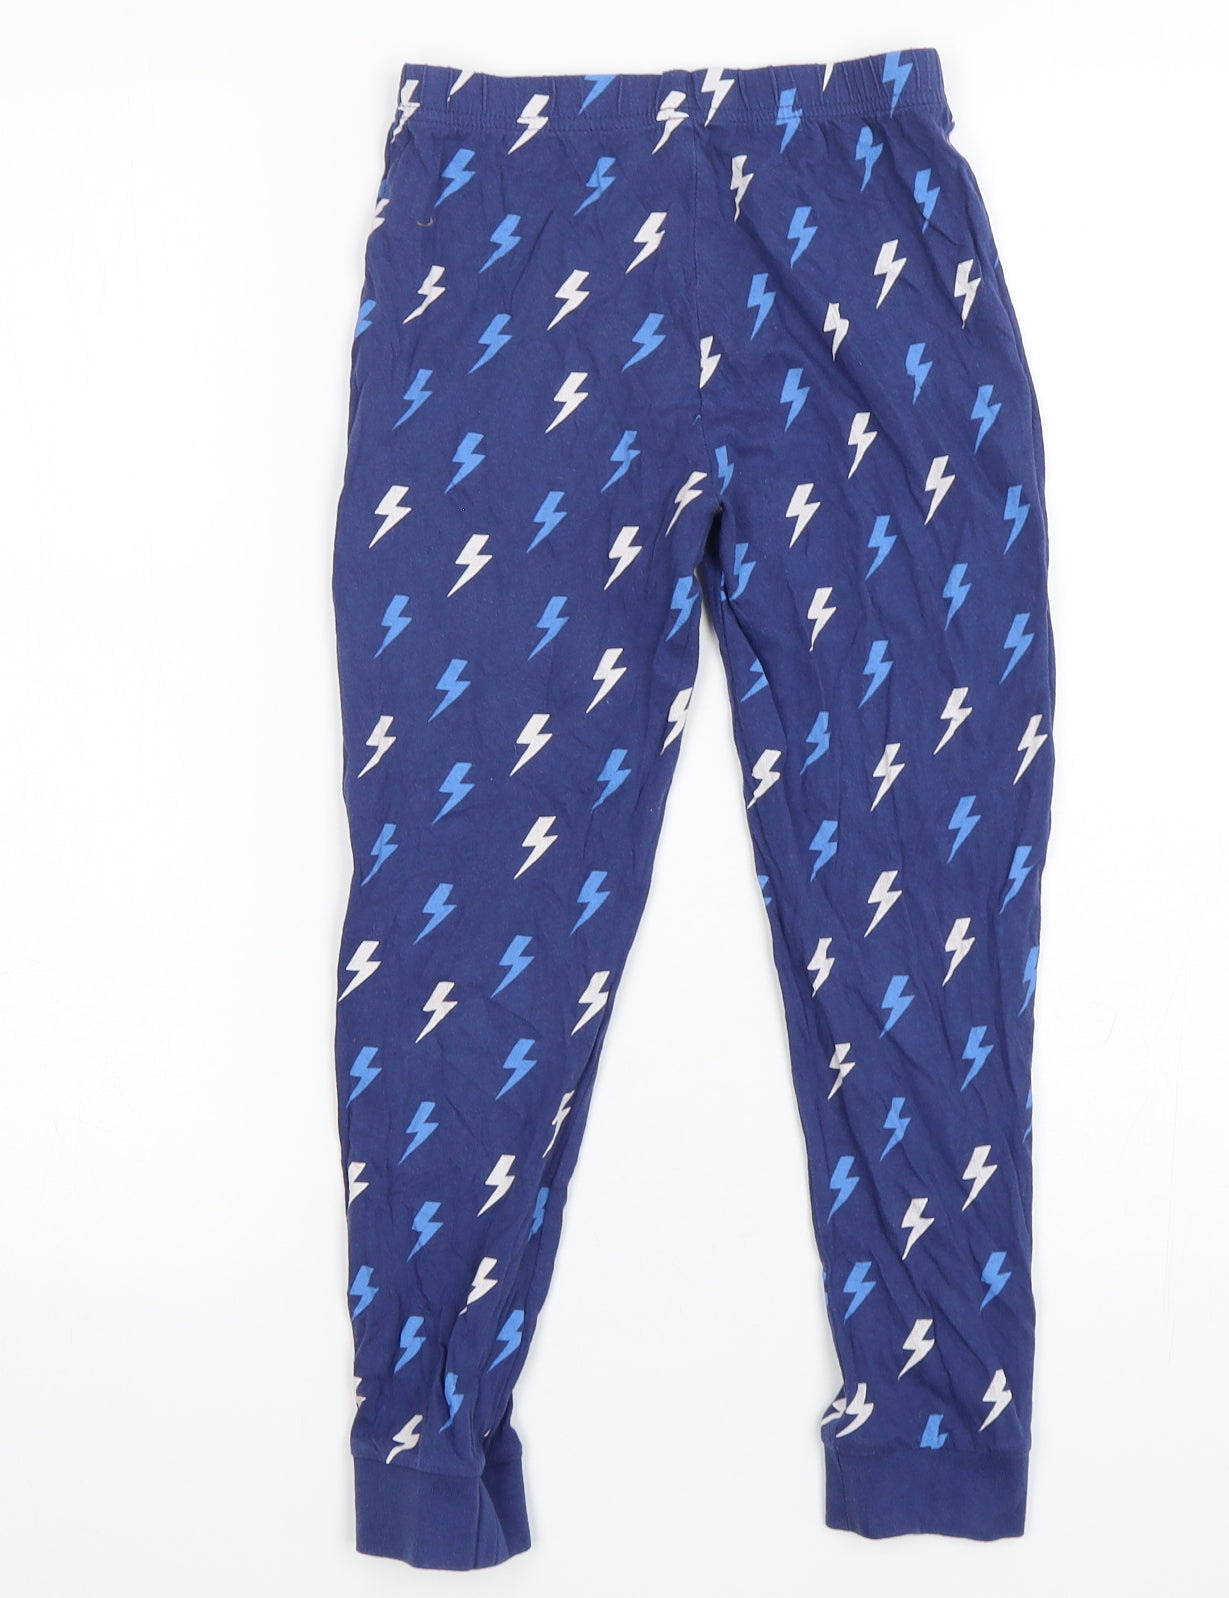 F&F Boys Blue Spotted Cotton  Pyjama Pants Size 7-8 Years